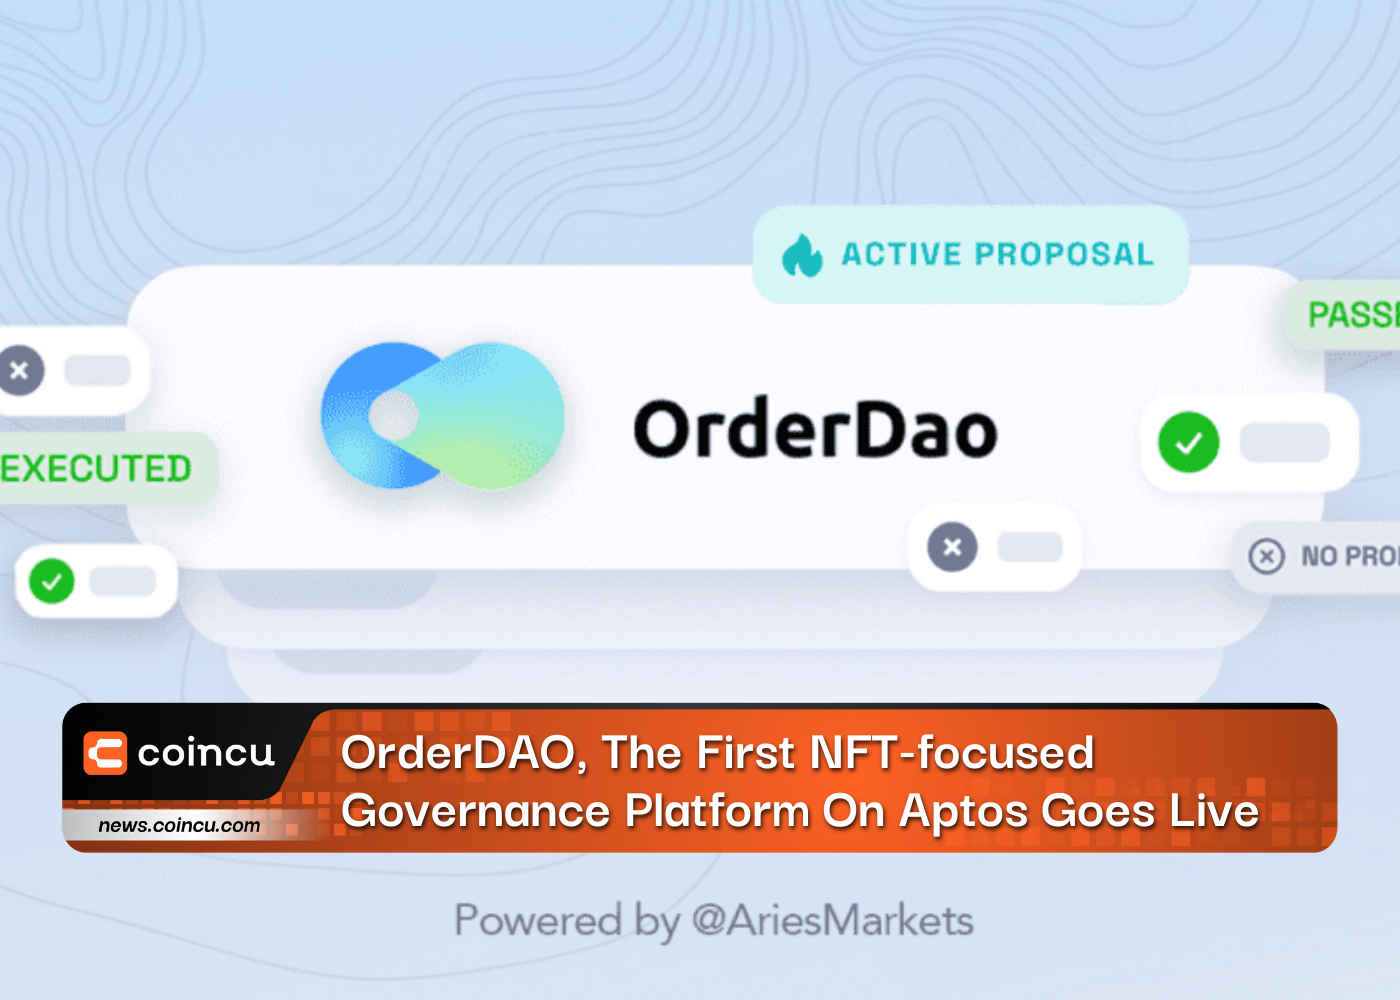 OrderDAO, The First NFT-focused Governance Platform On Aptos Goes Live